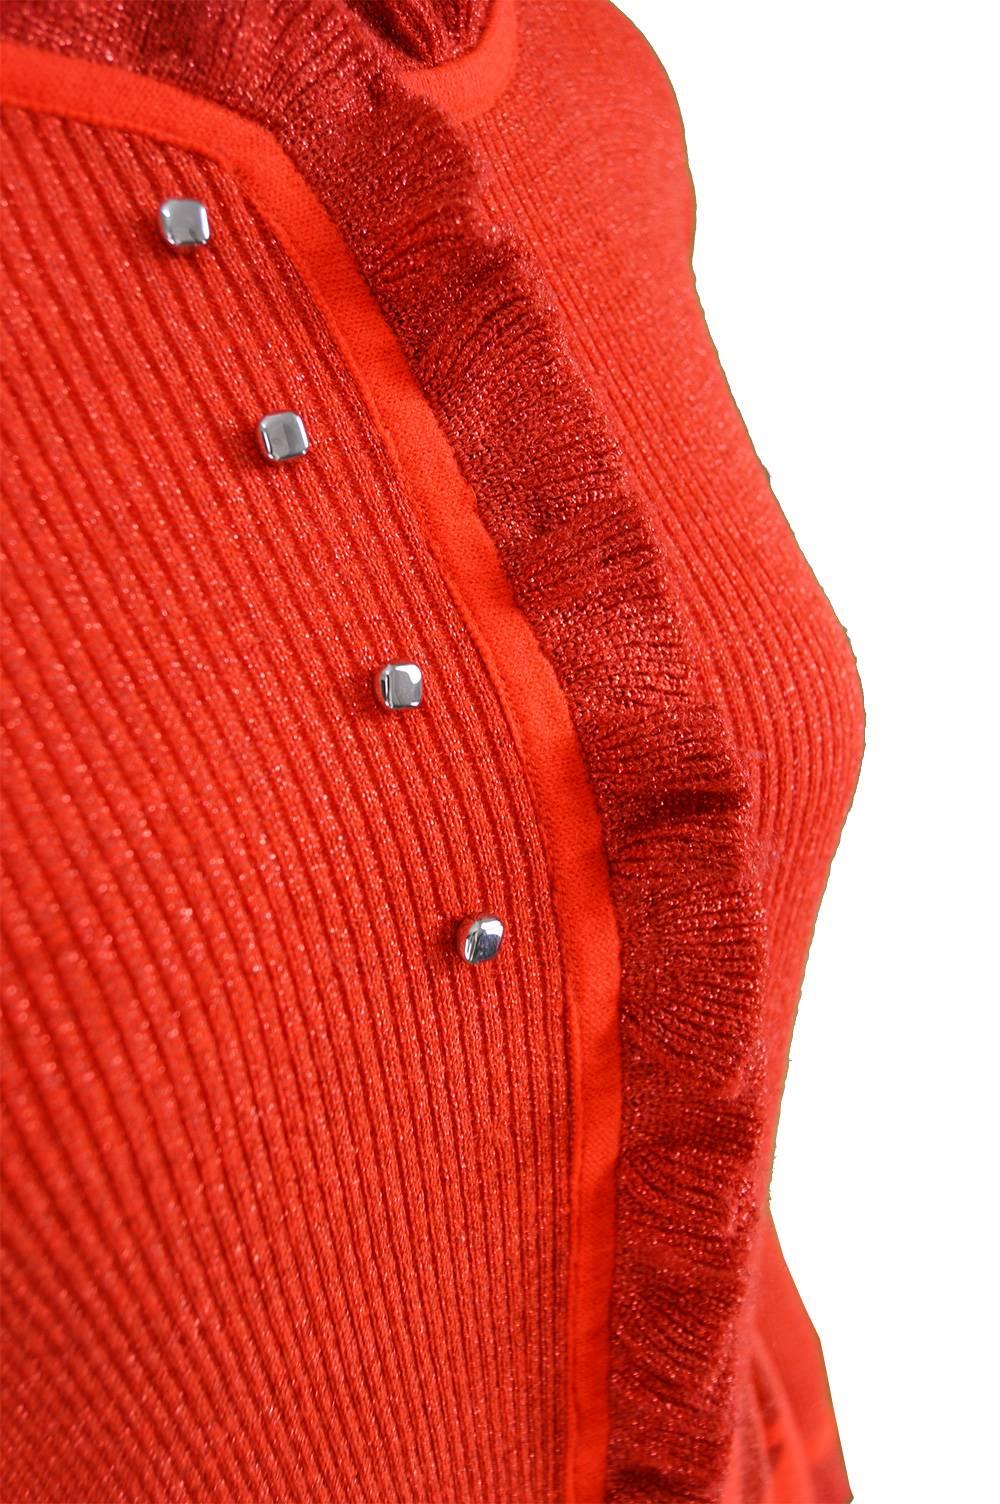 Louis Feraud 1970s Vintage Red Knit Dress For Sale 1